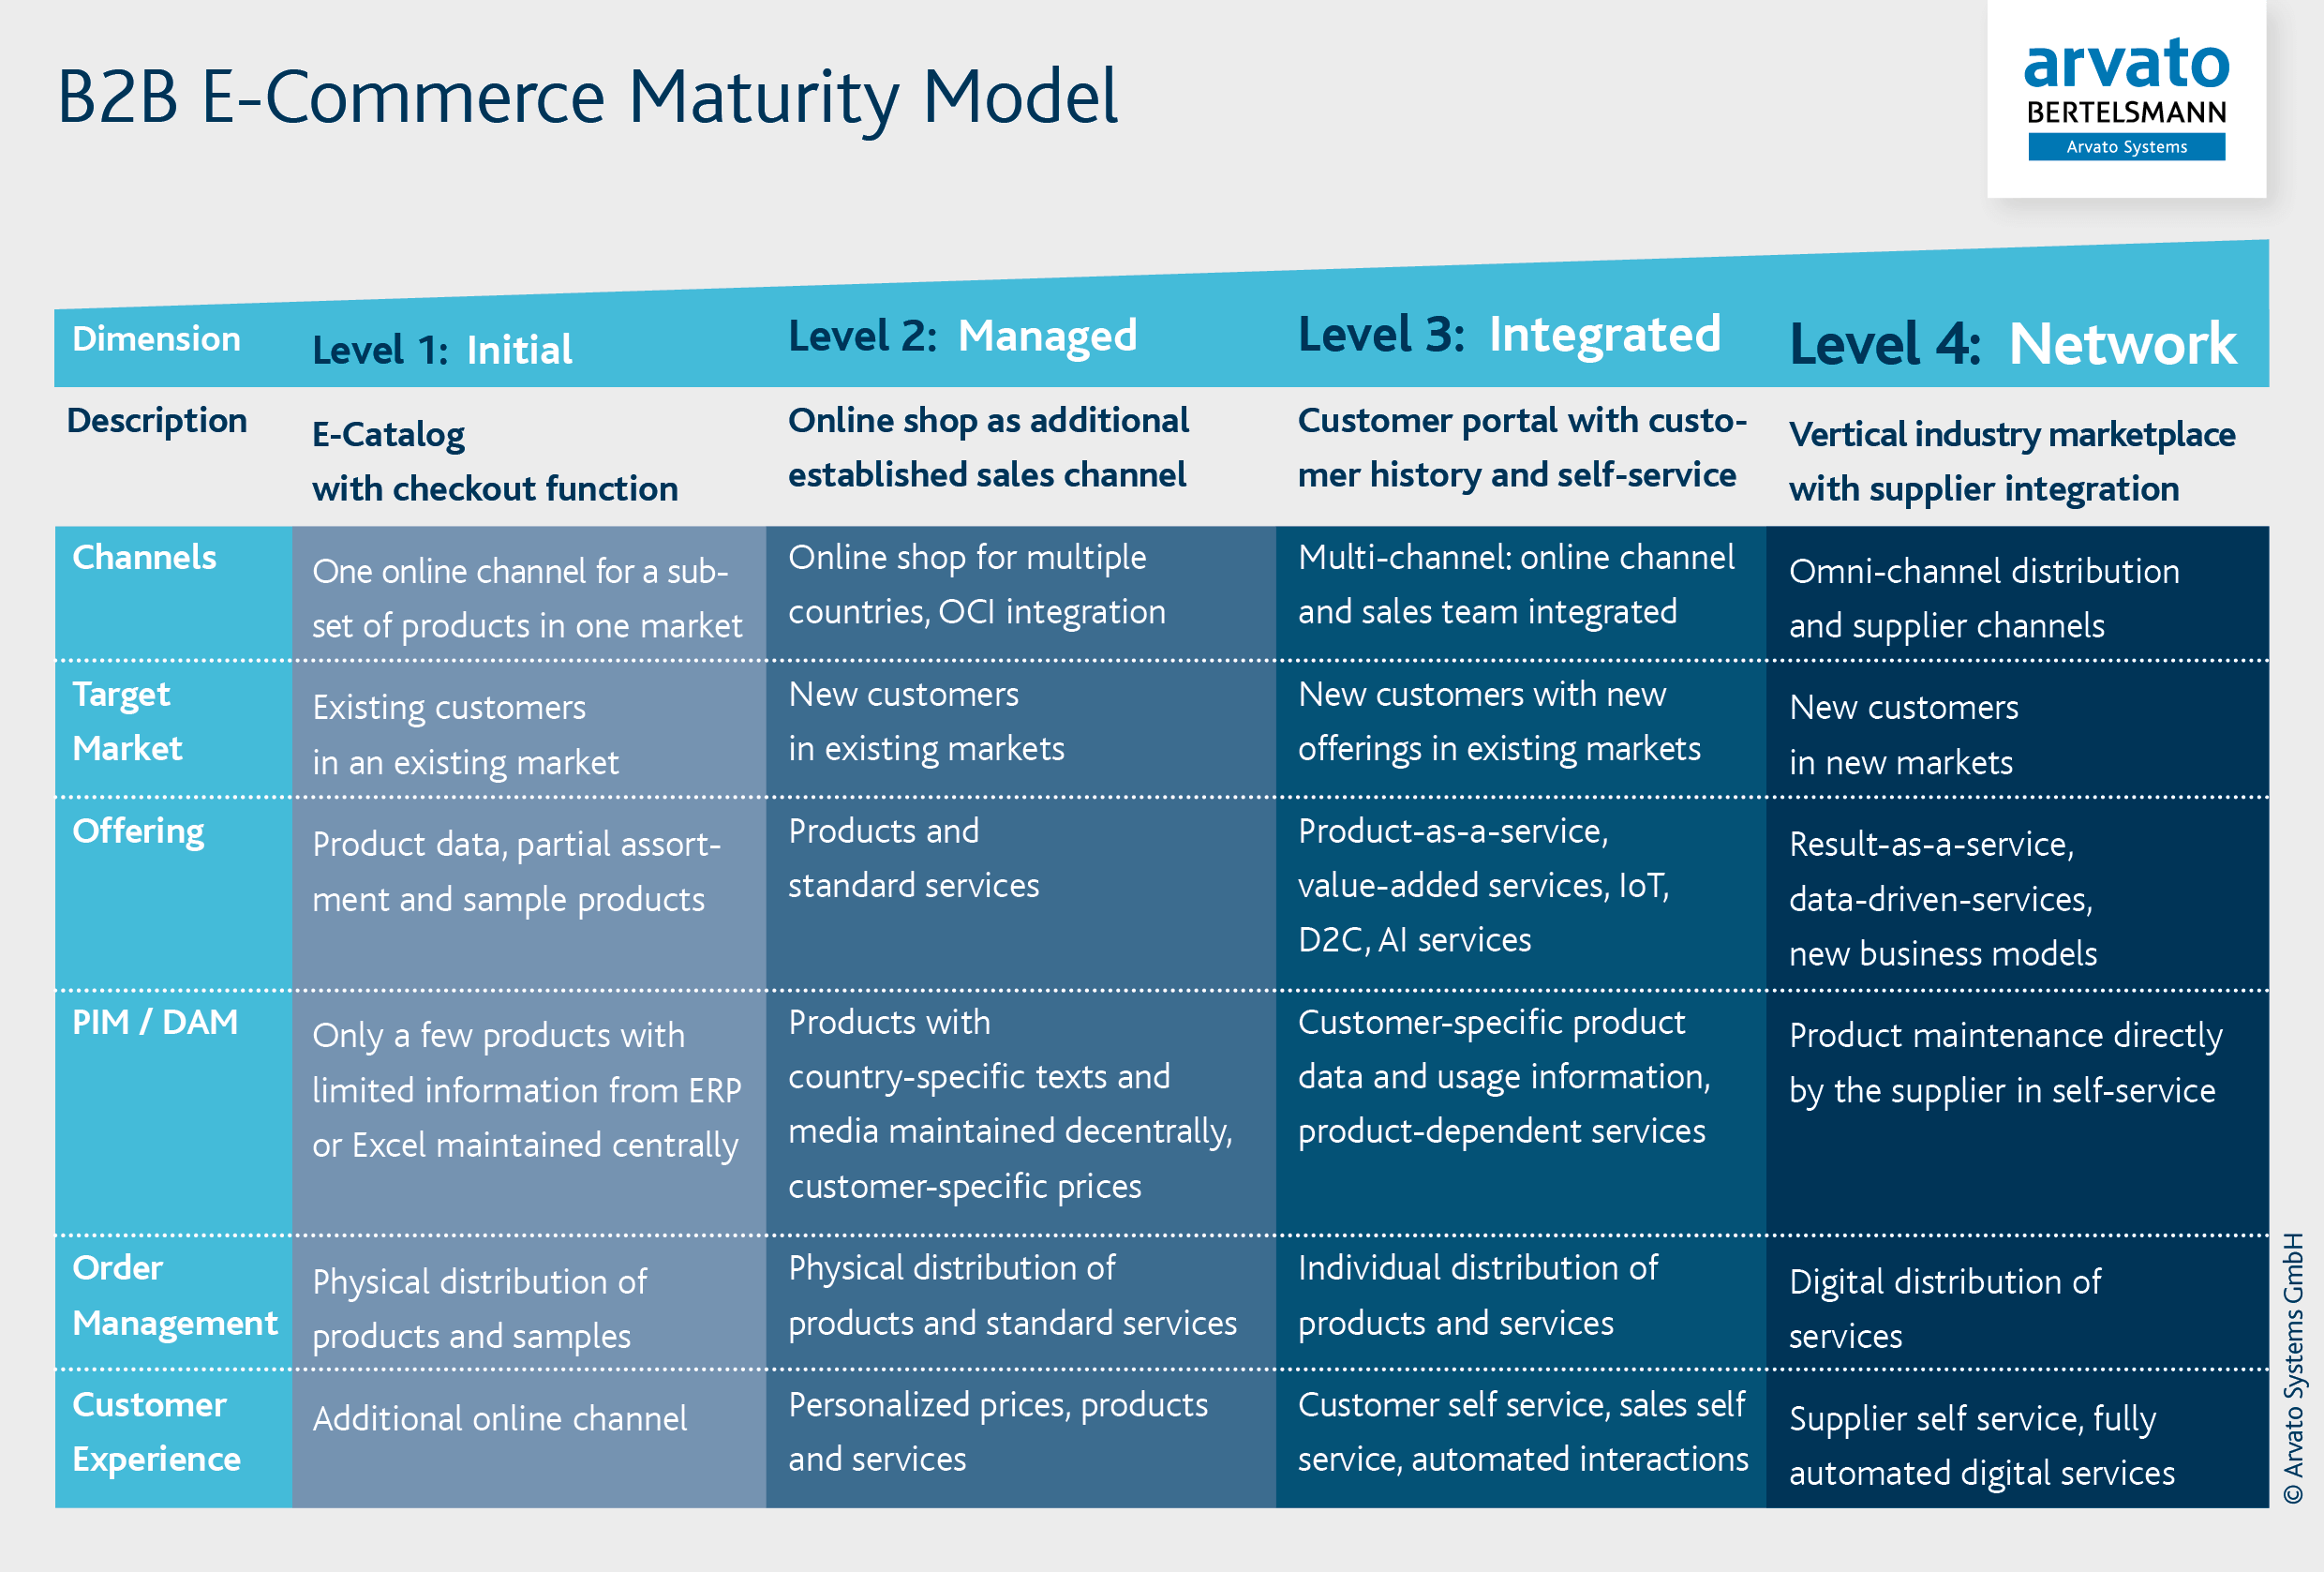 B2B E-Commerce Maturity Model (Matrix) - Arvato Systems